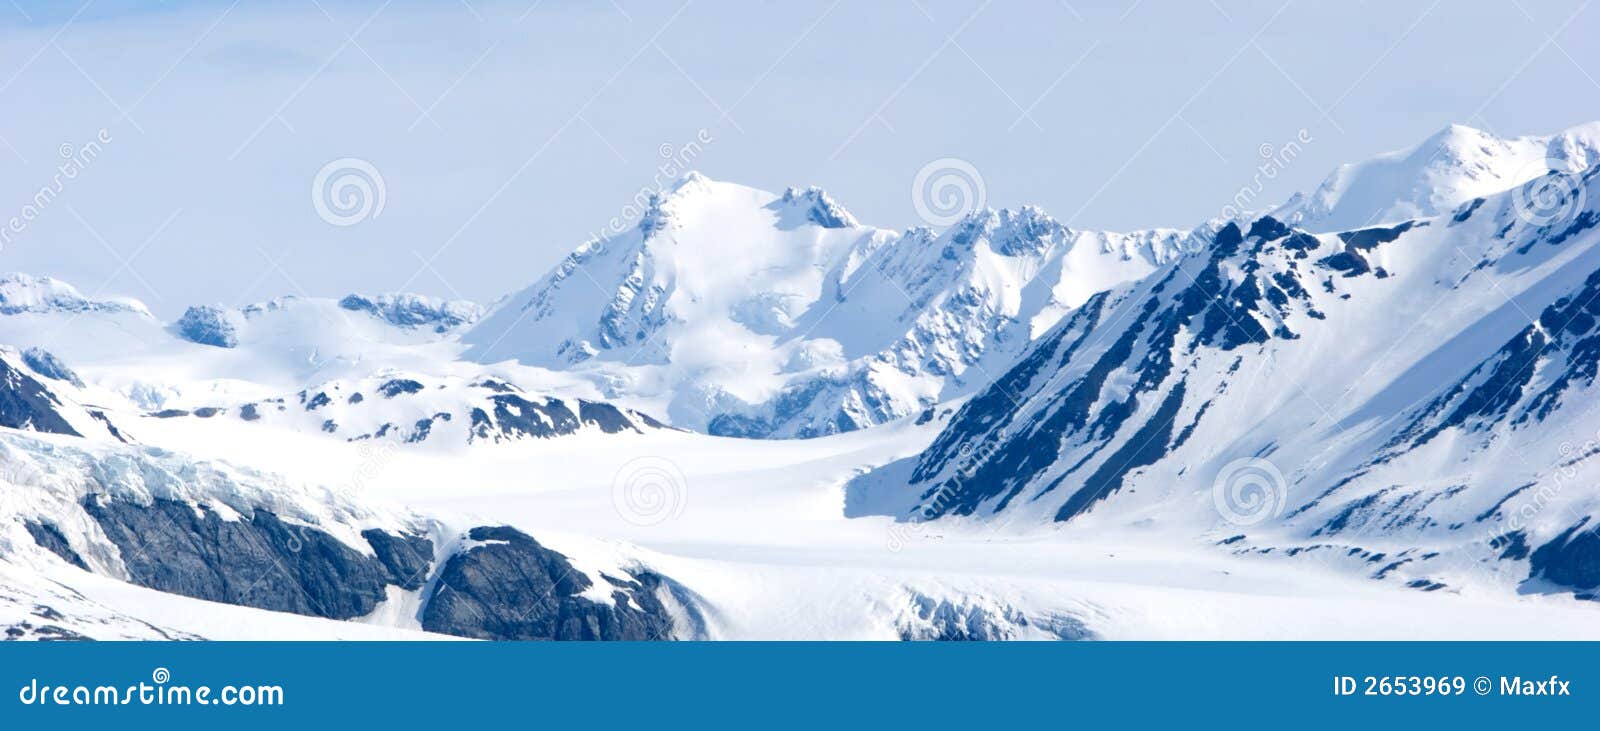 snowy alaska mountains